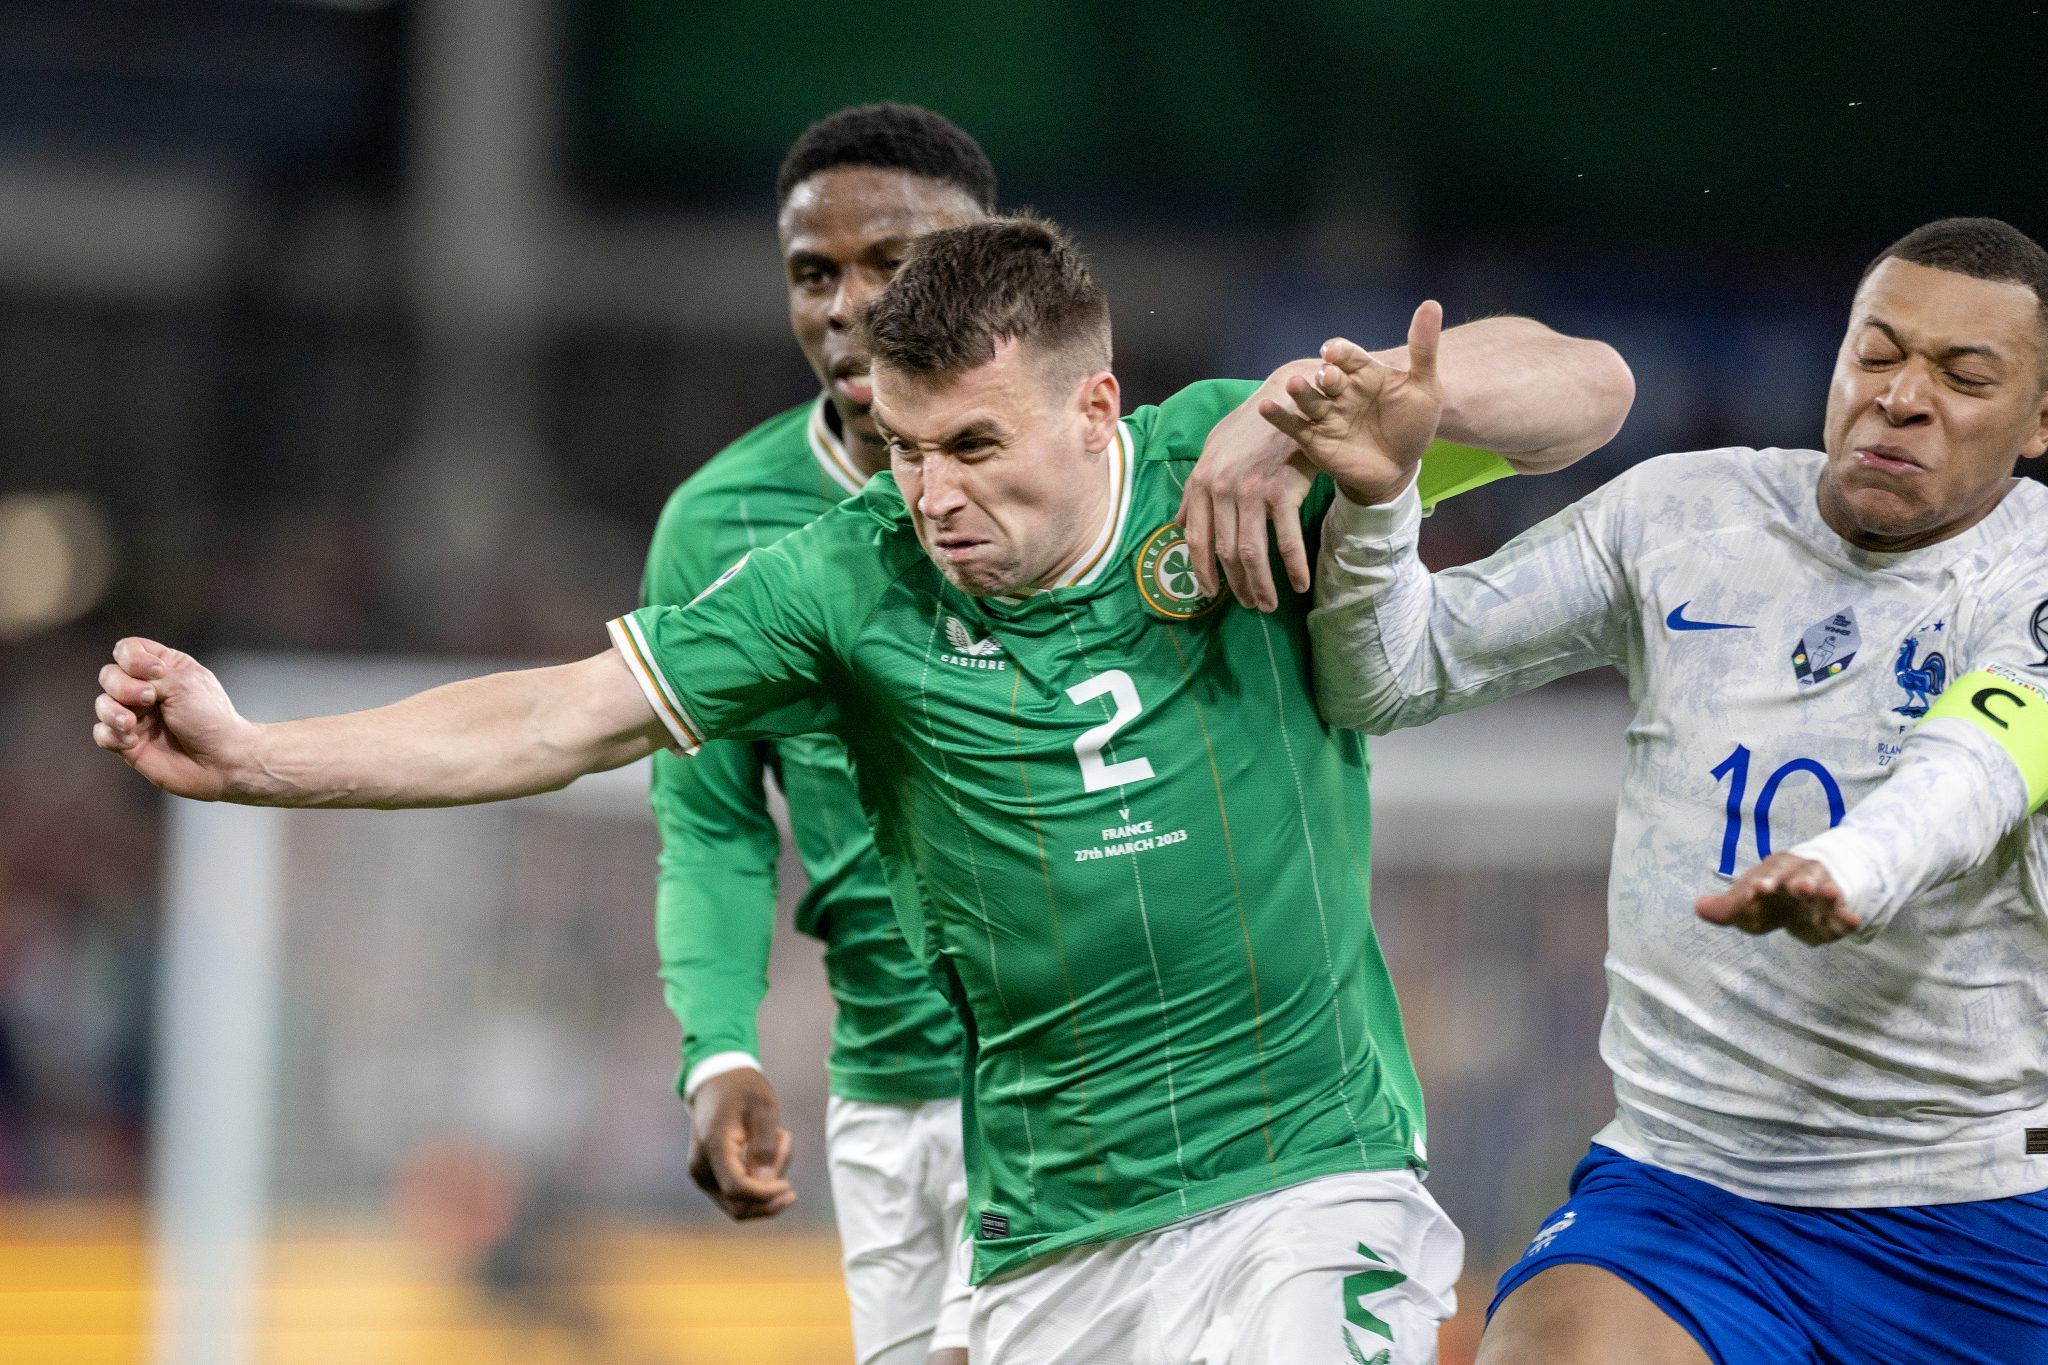 L'Equipe player ratings for Ireland v France